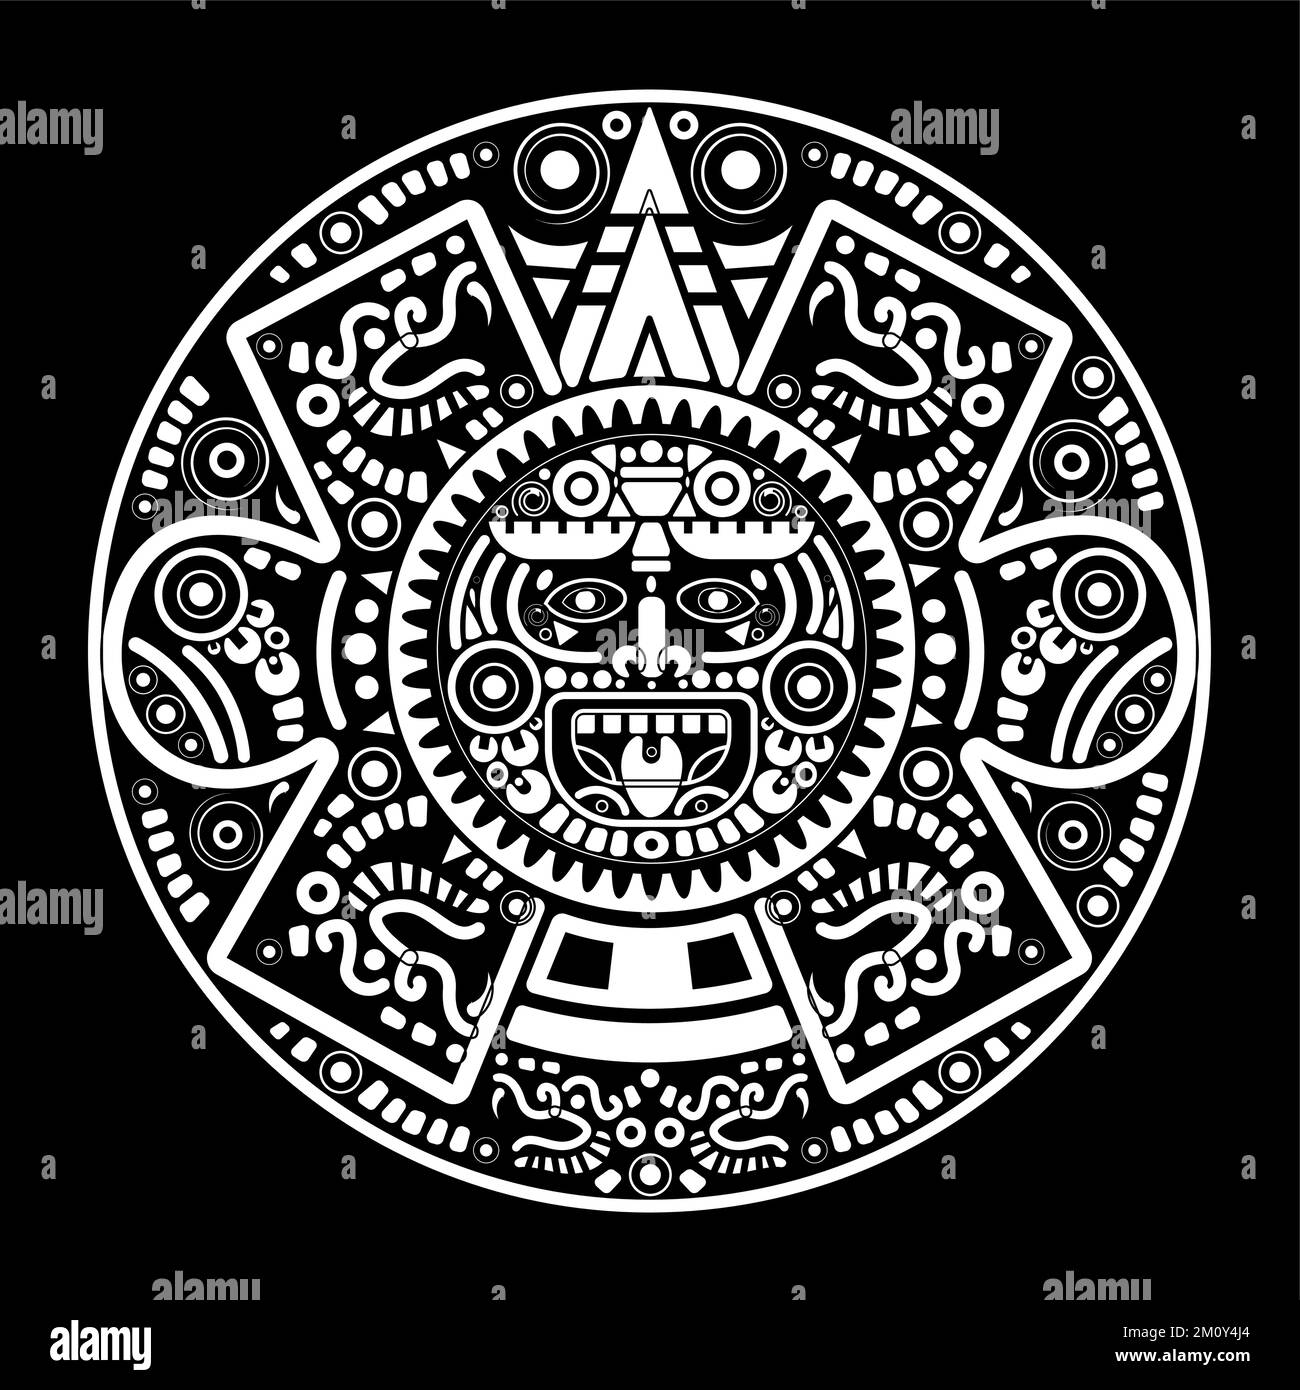 aztec border tattoo designs